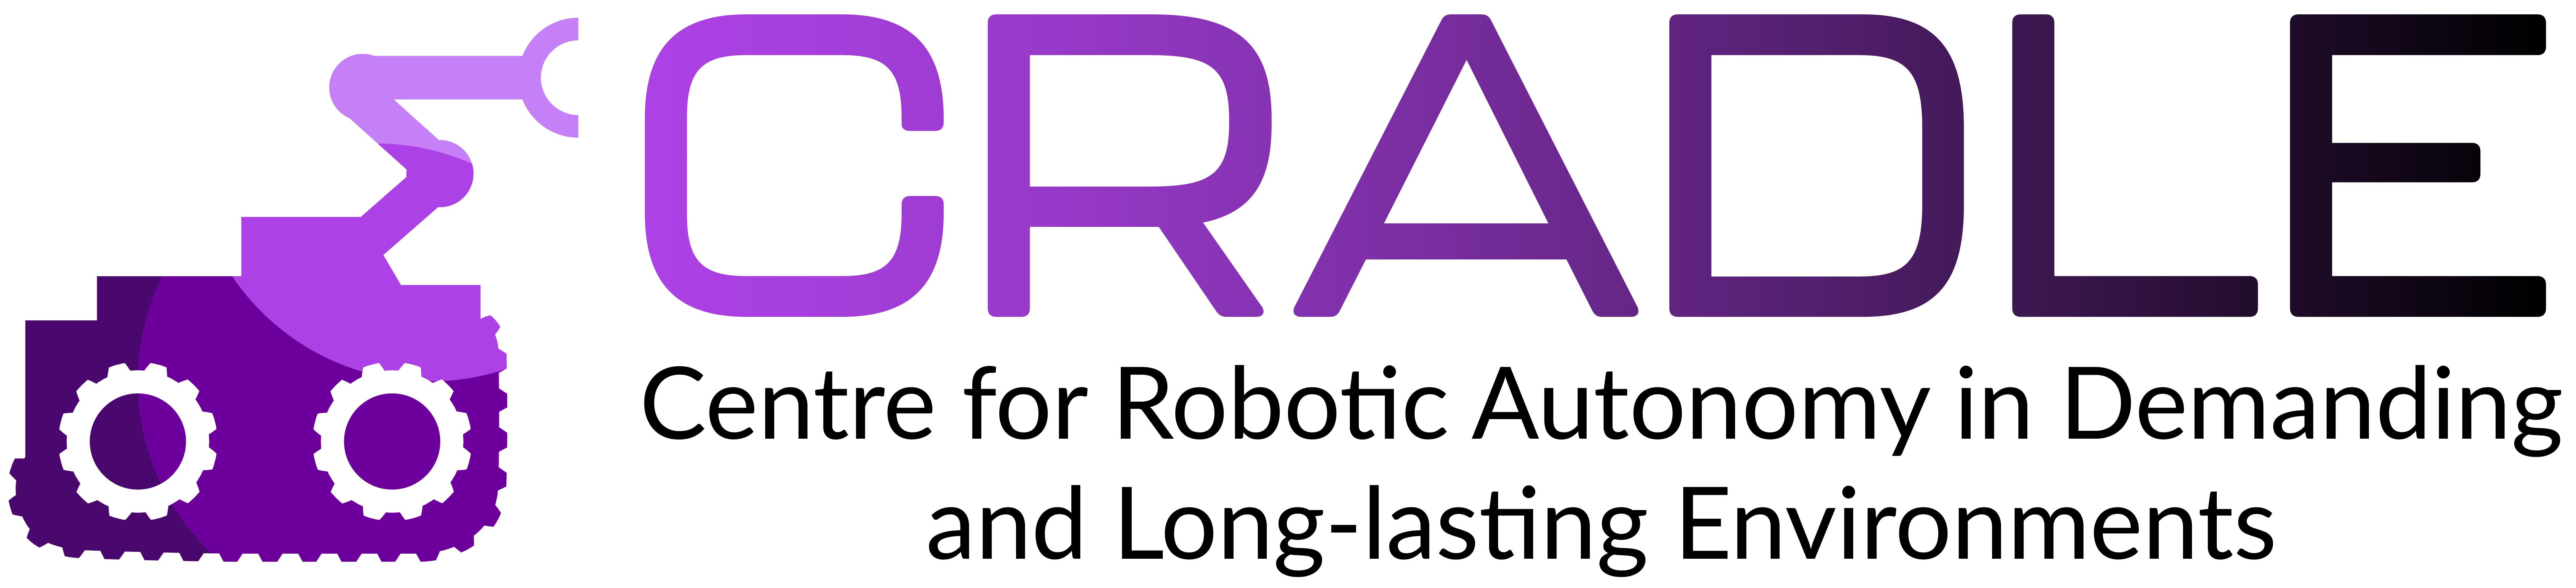 CRADLE Project Logo